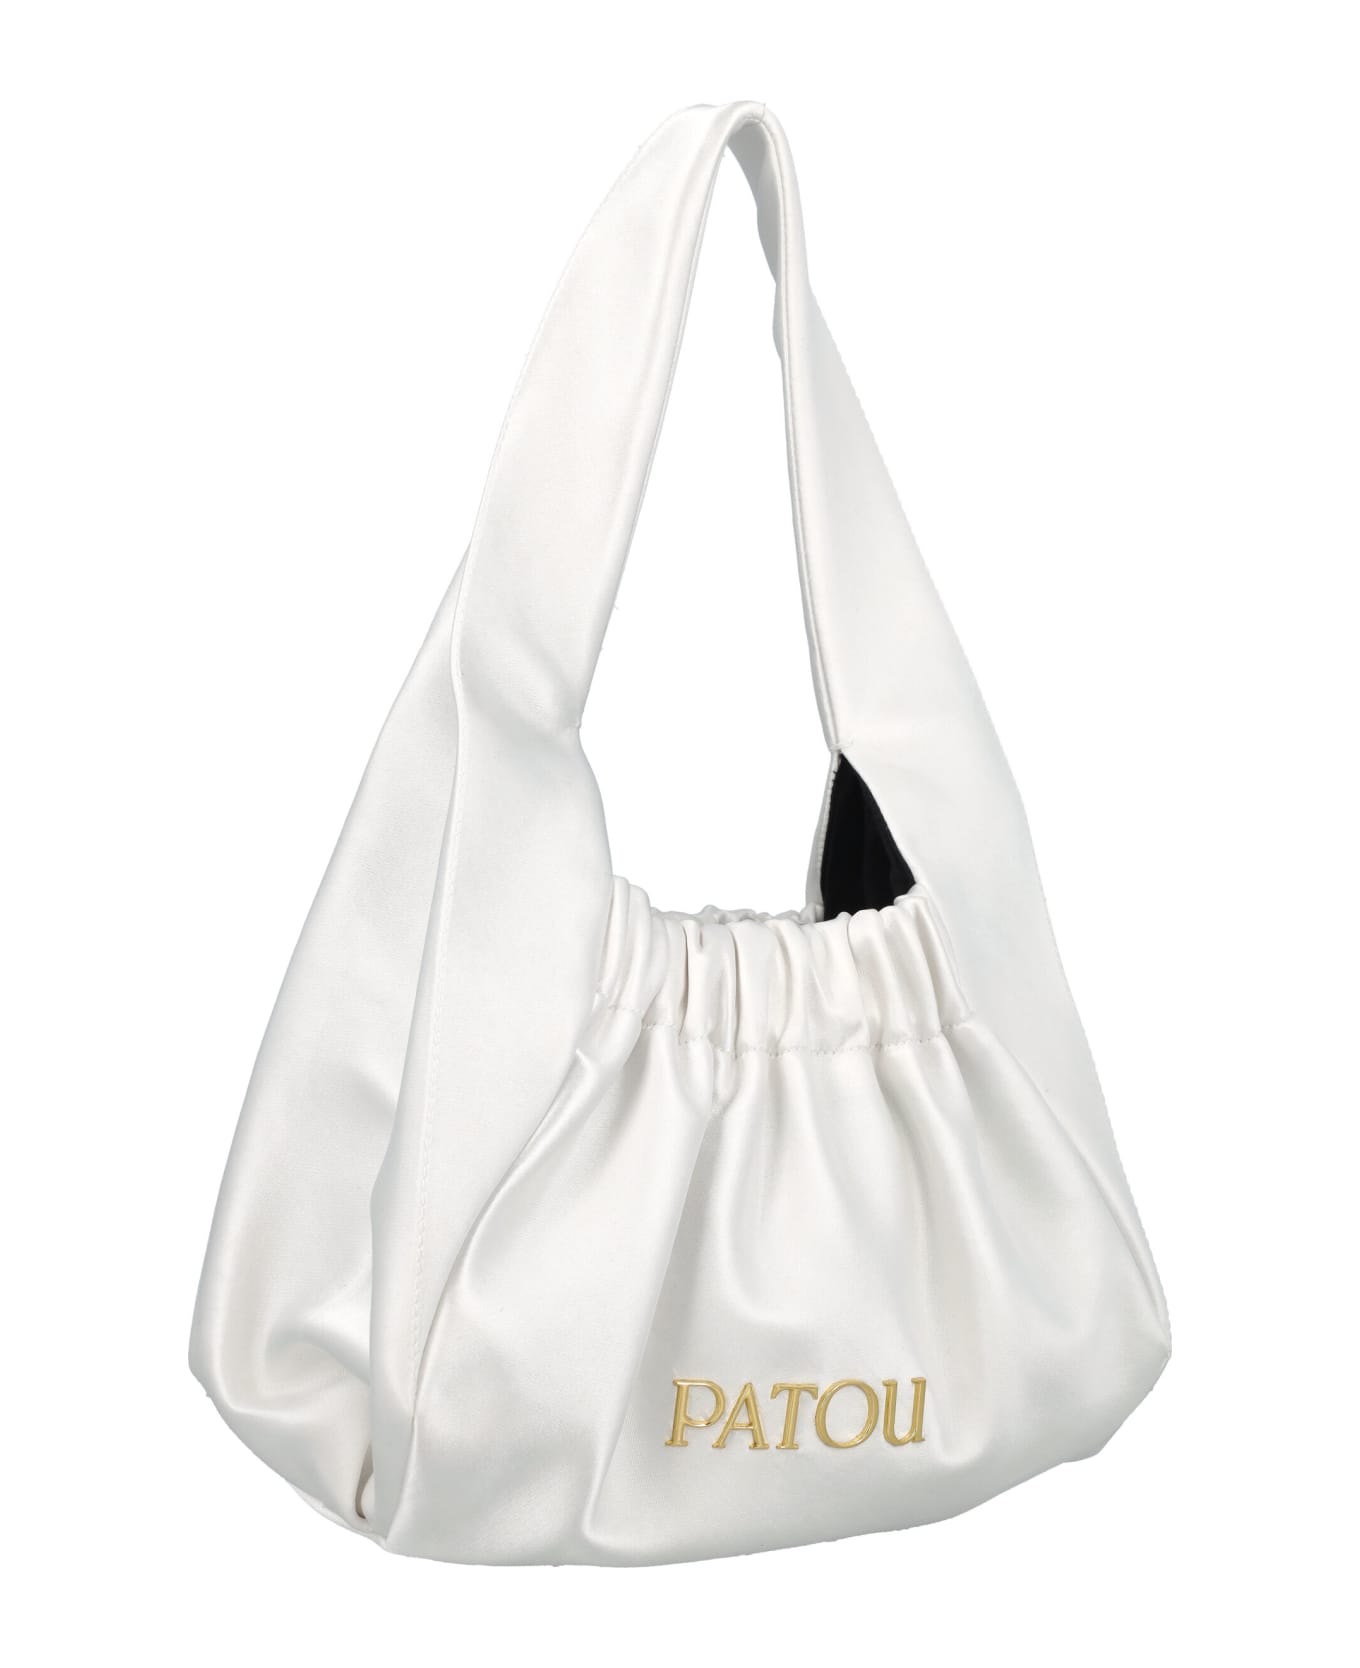 Patou Le Biscuit Bag - White